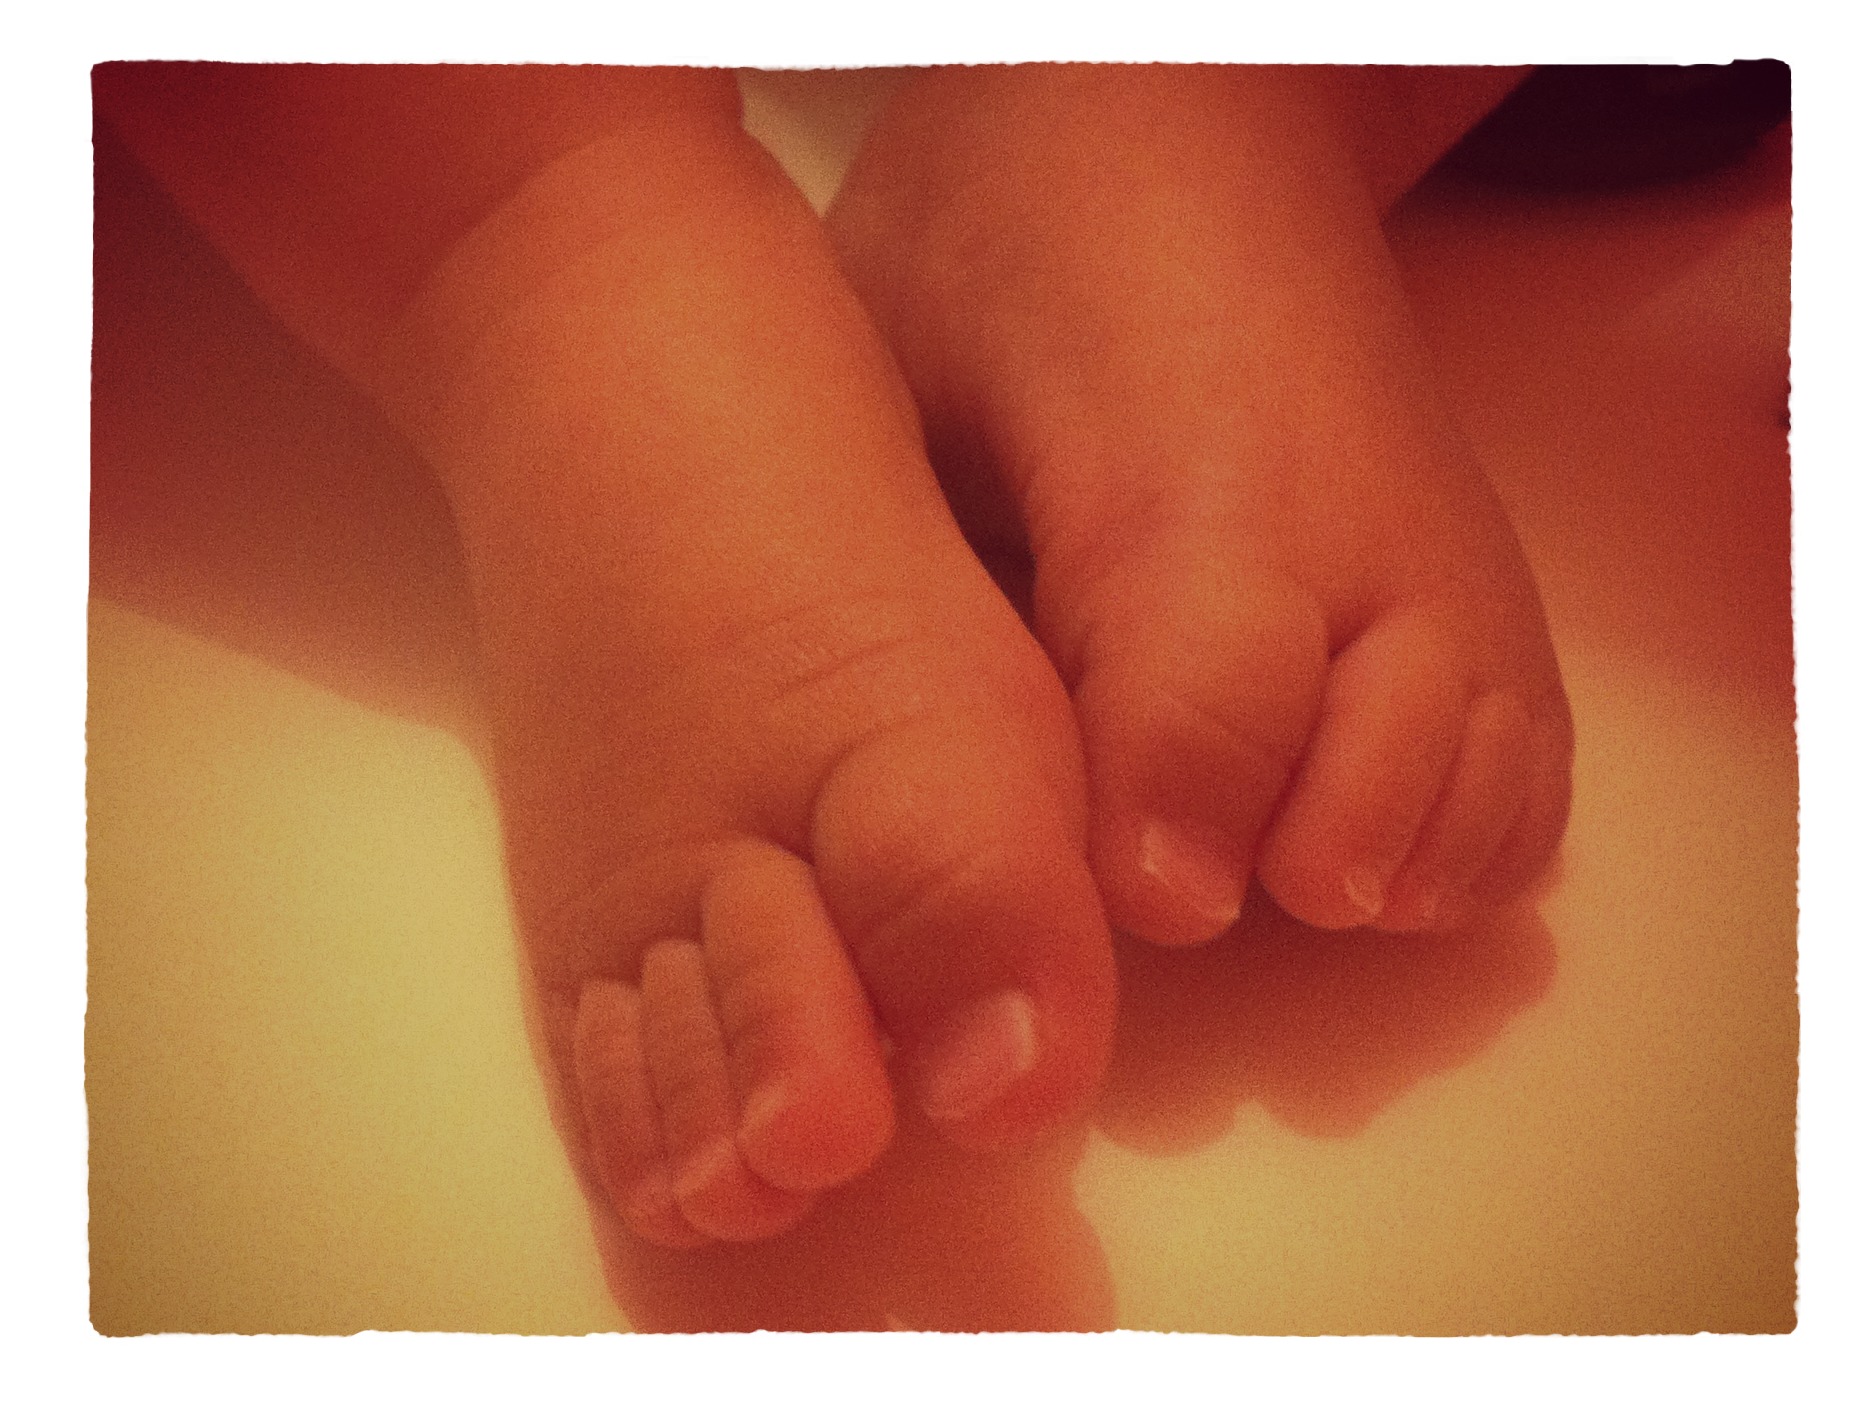 Pretty Little Feet